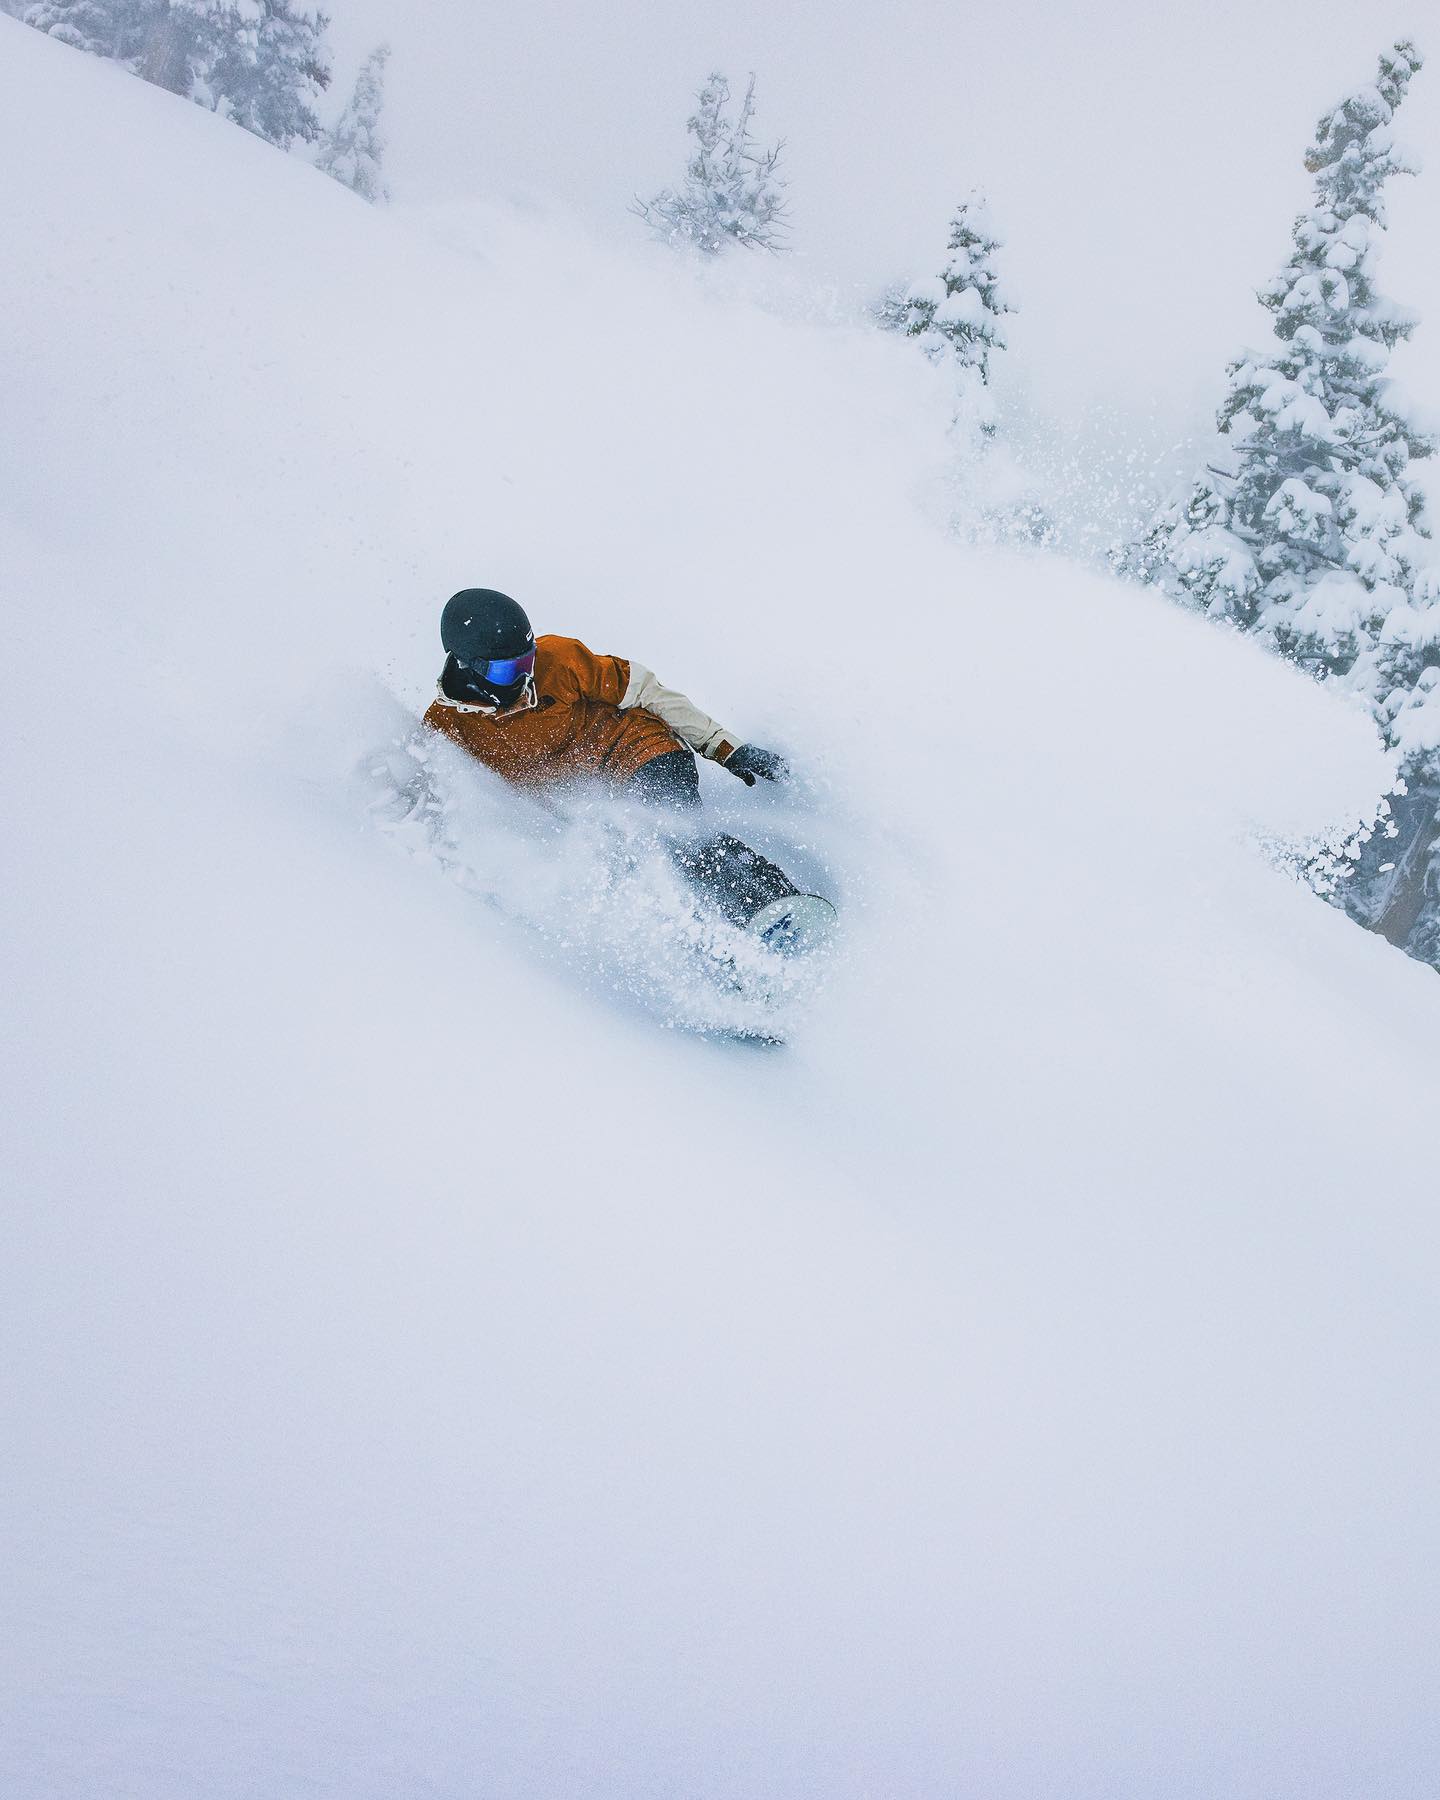 snowboarder slashing deep powder at Big Bear Mountain Resort record big bear ski season